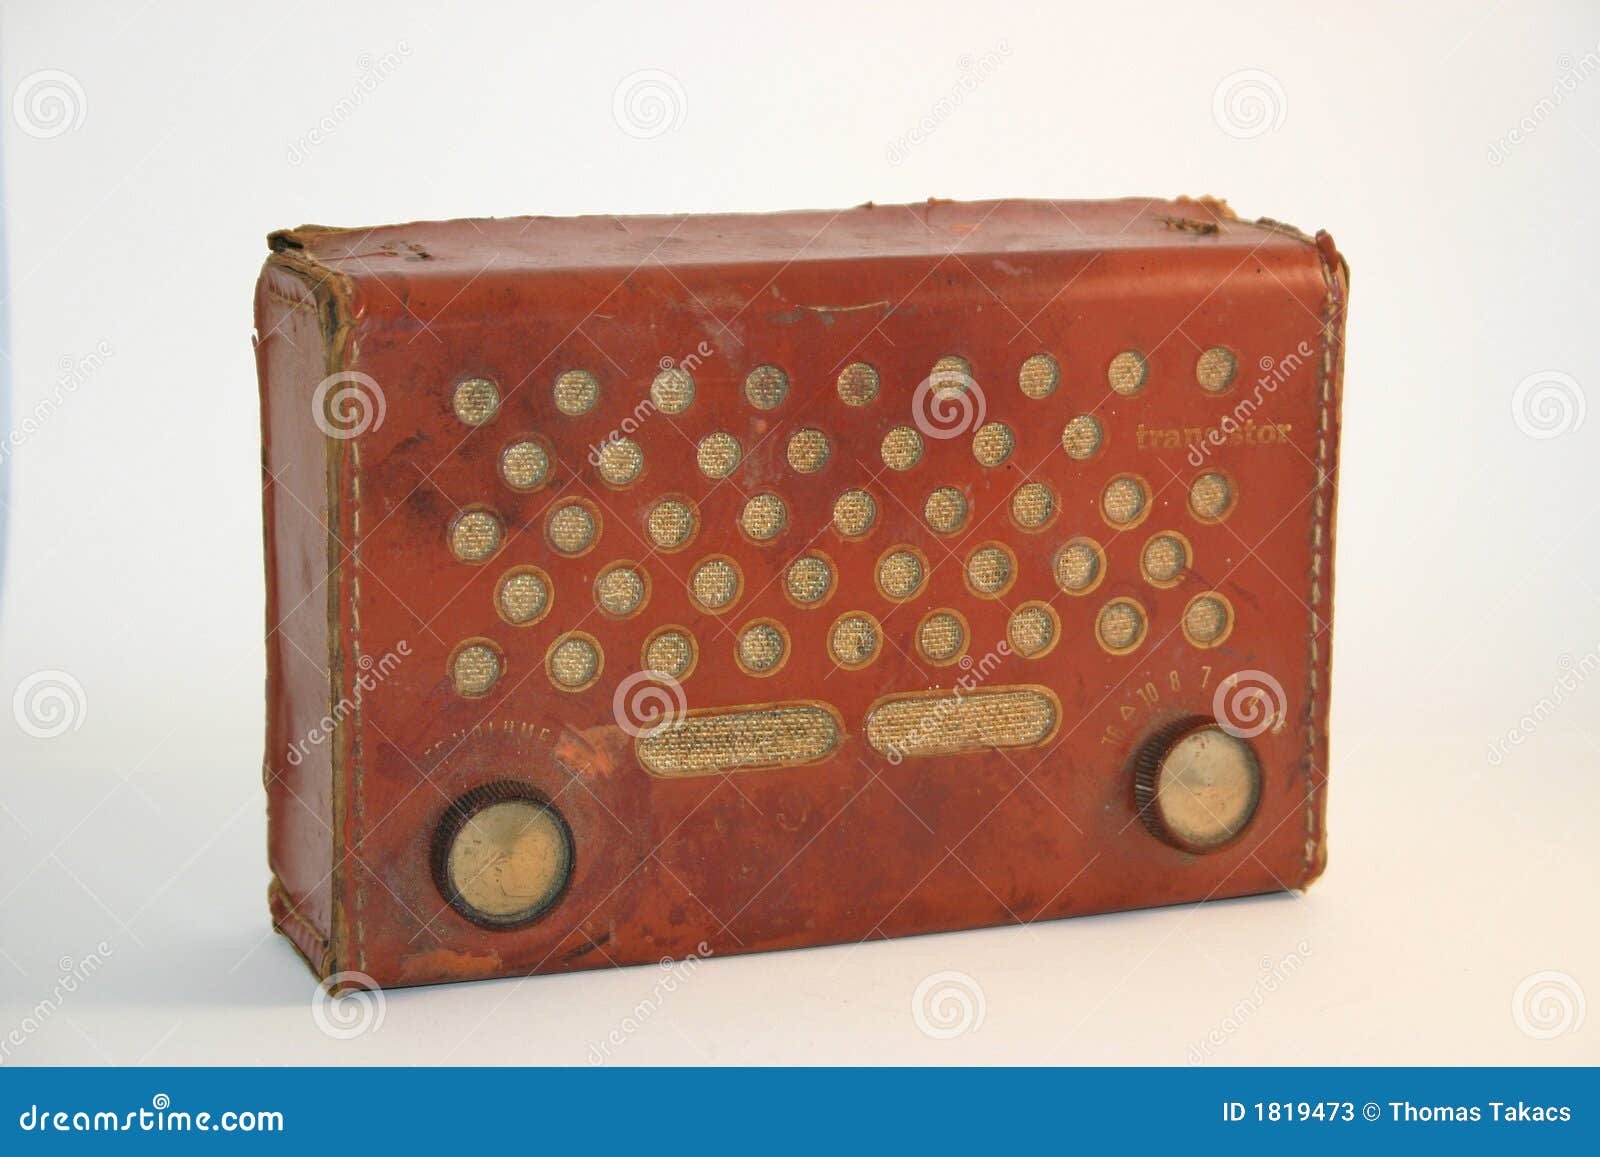 early transistor radio - portable